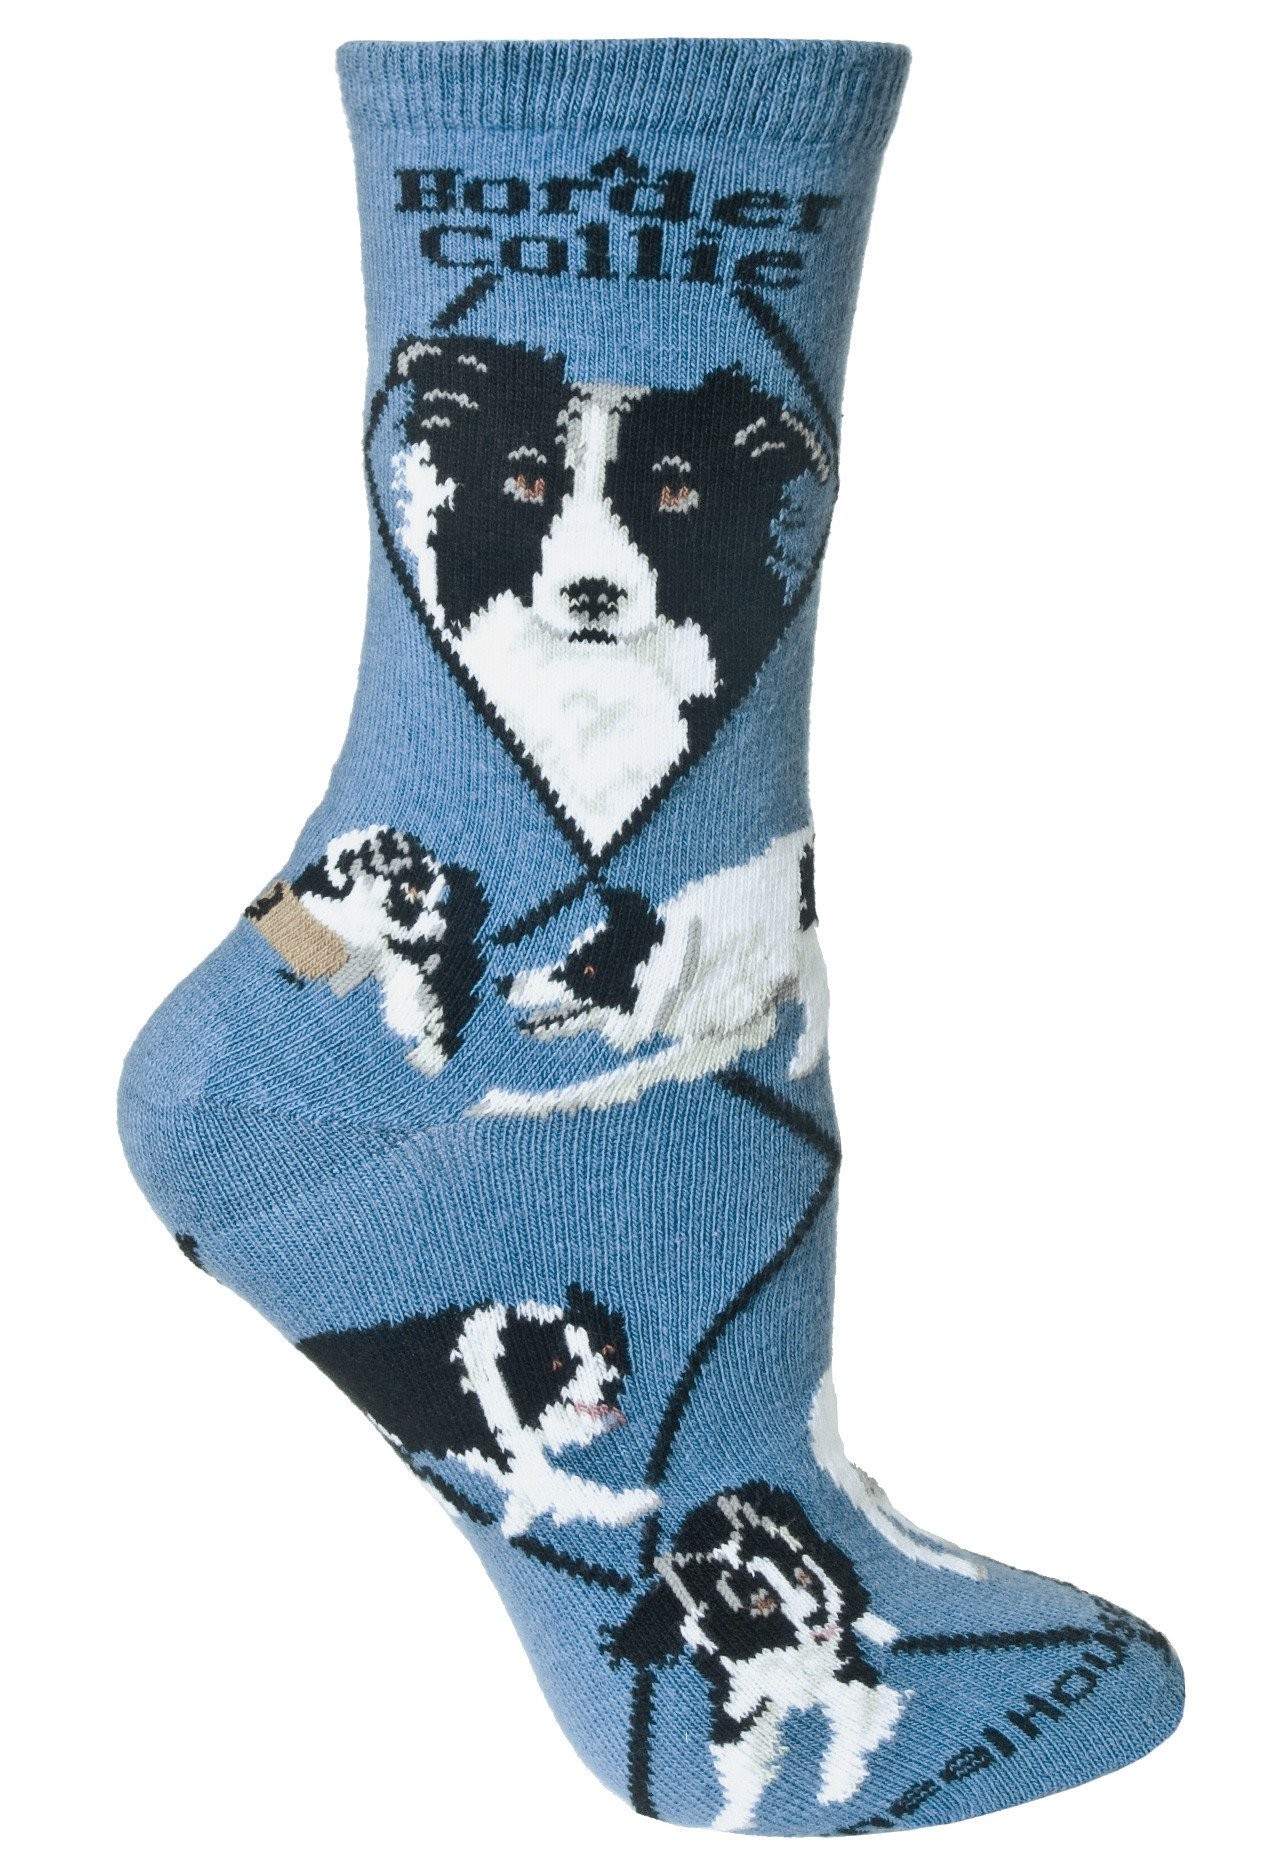 Border Collie Sock on Blue Size 9-11